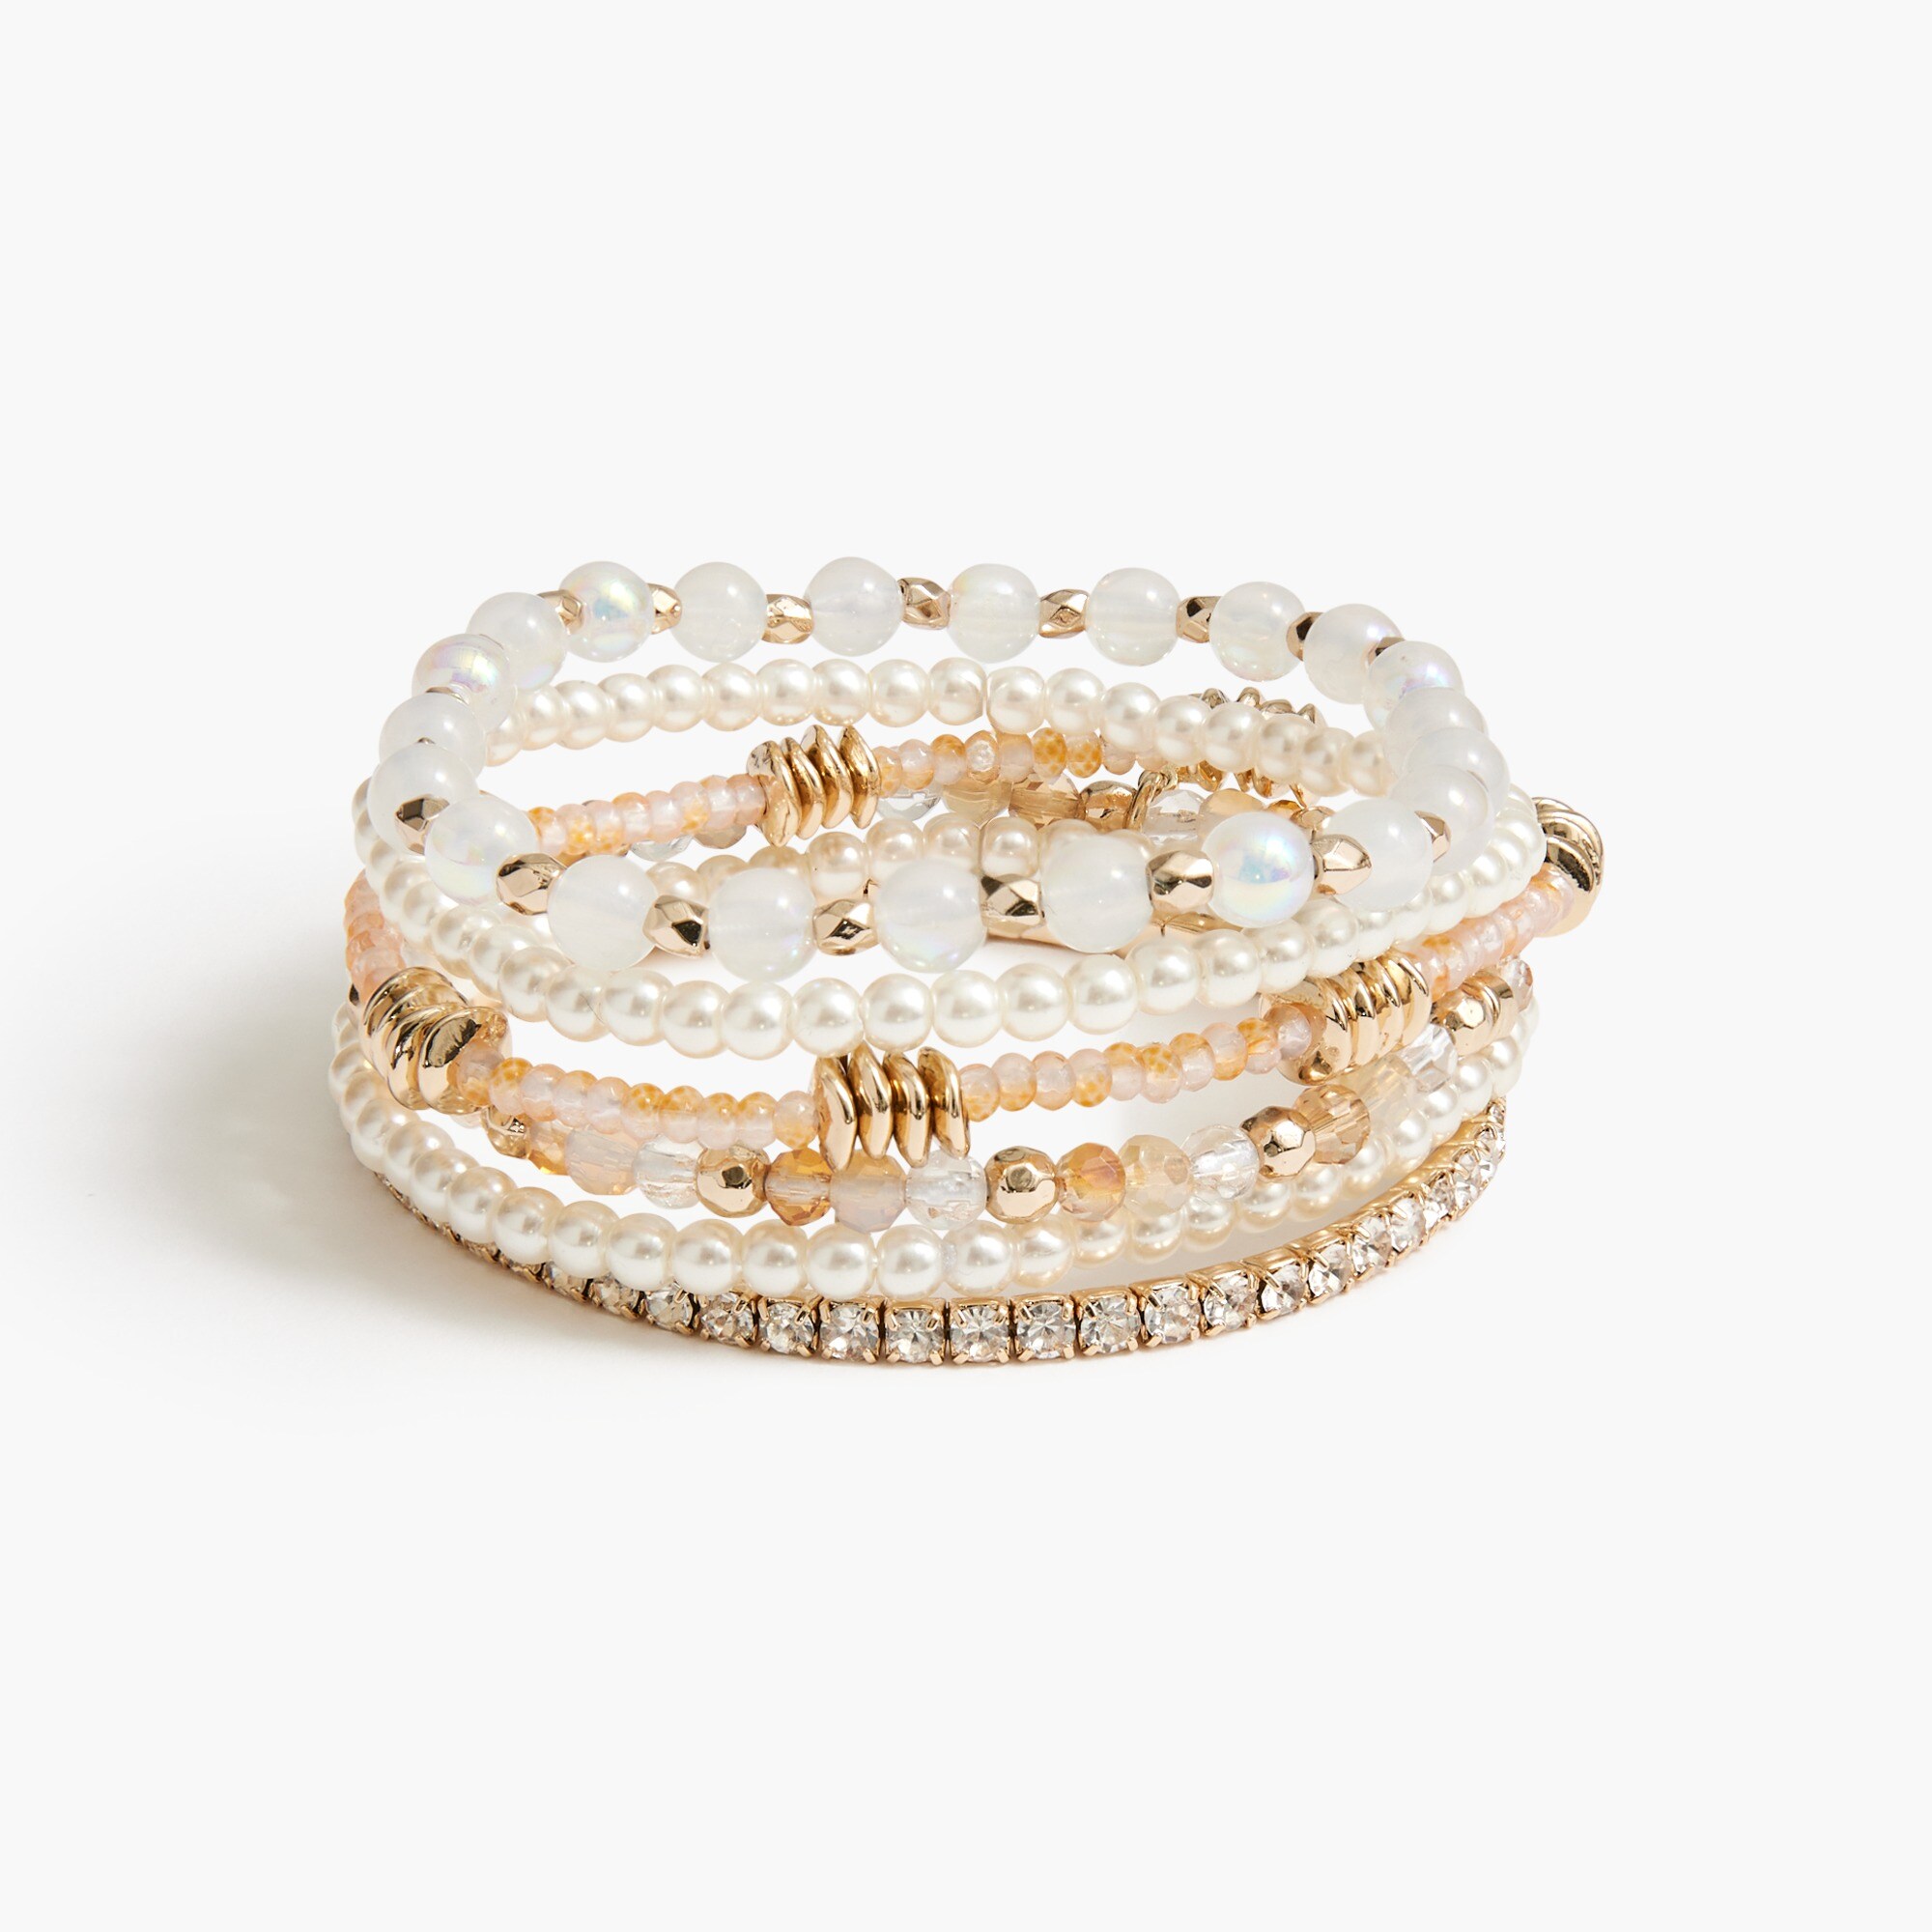  Mixed beads stretch bracelets set-of-six